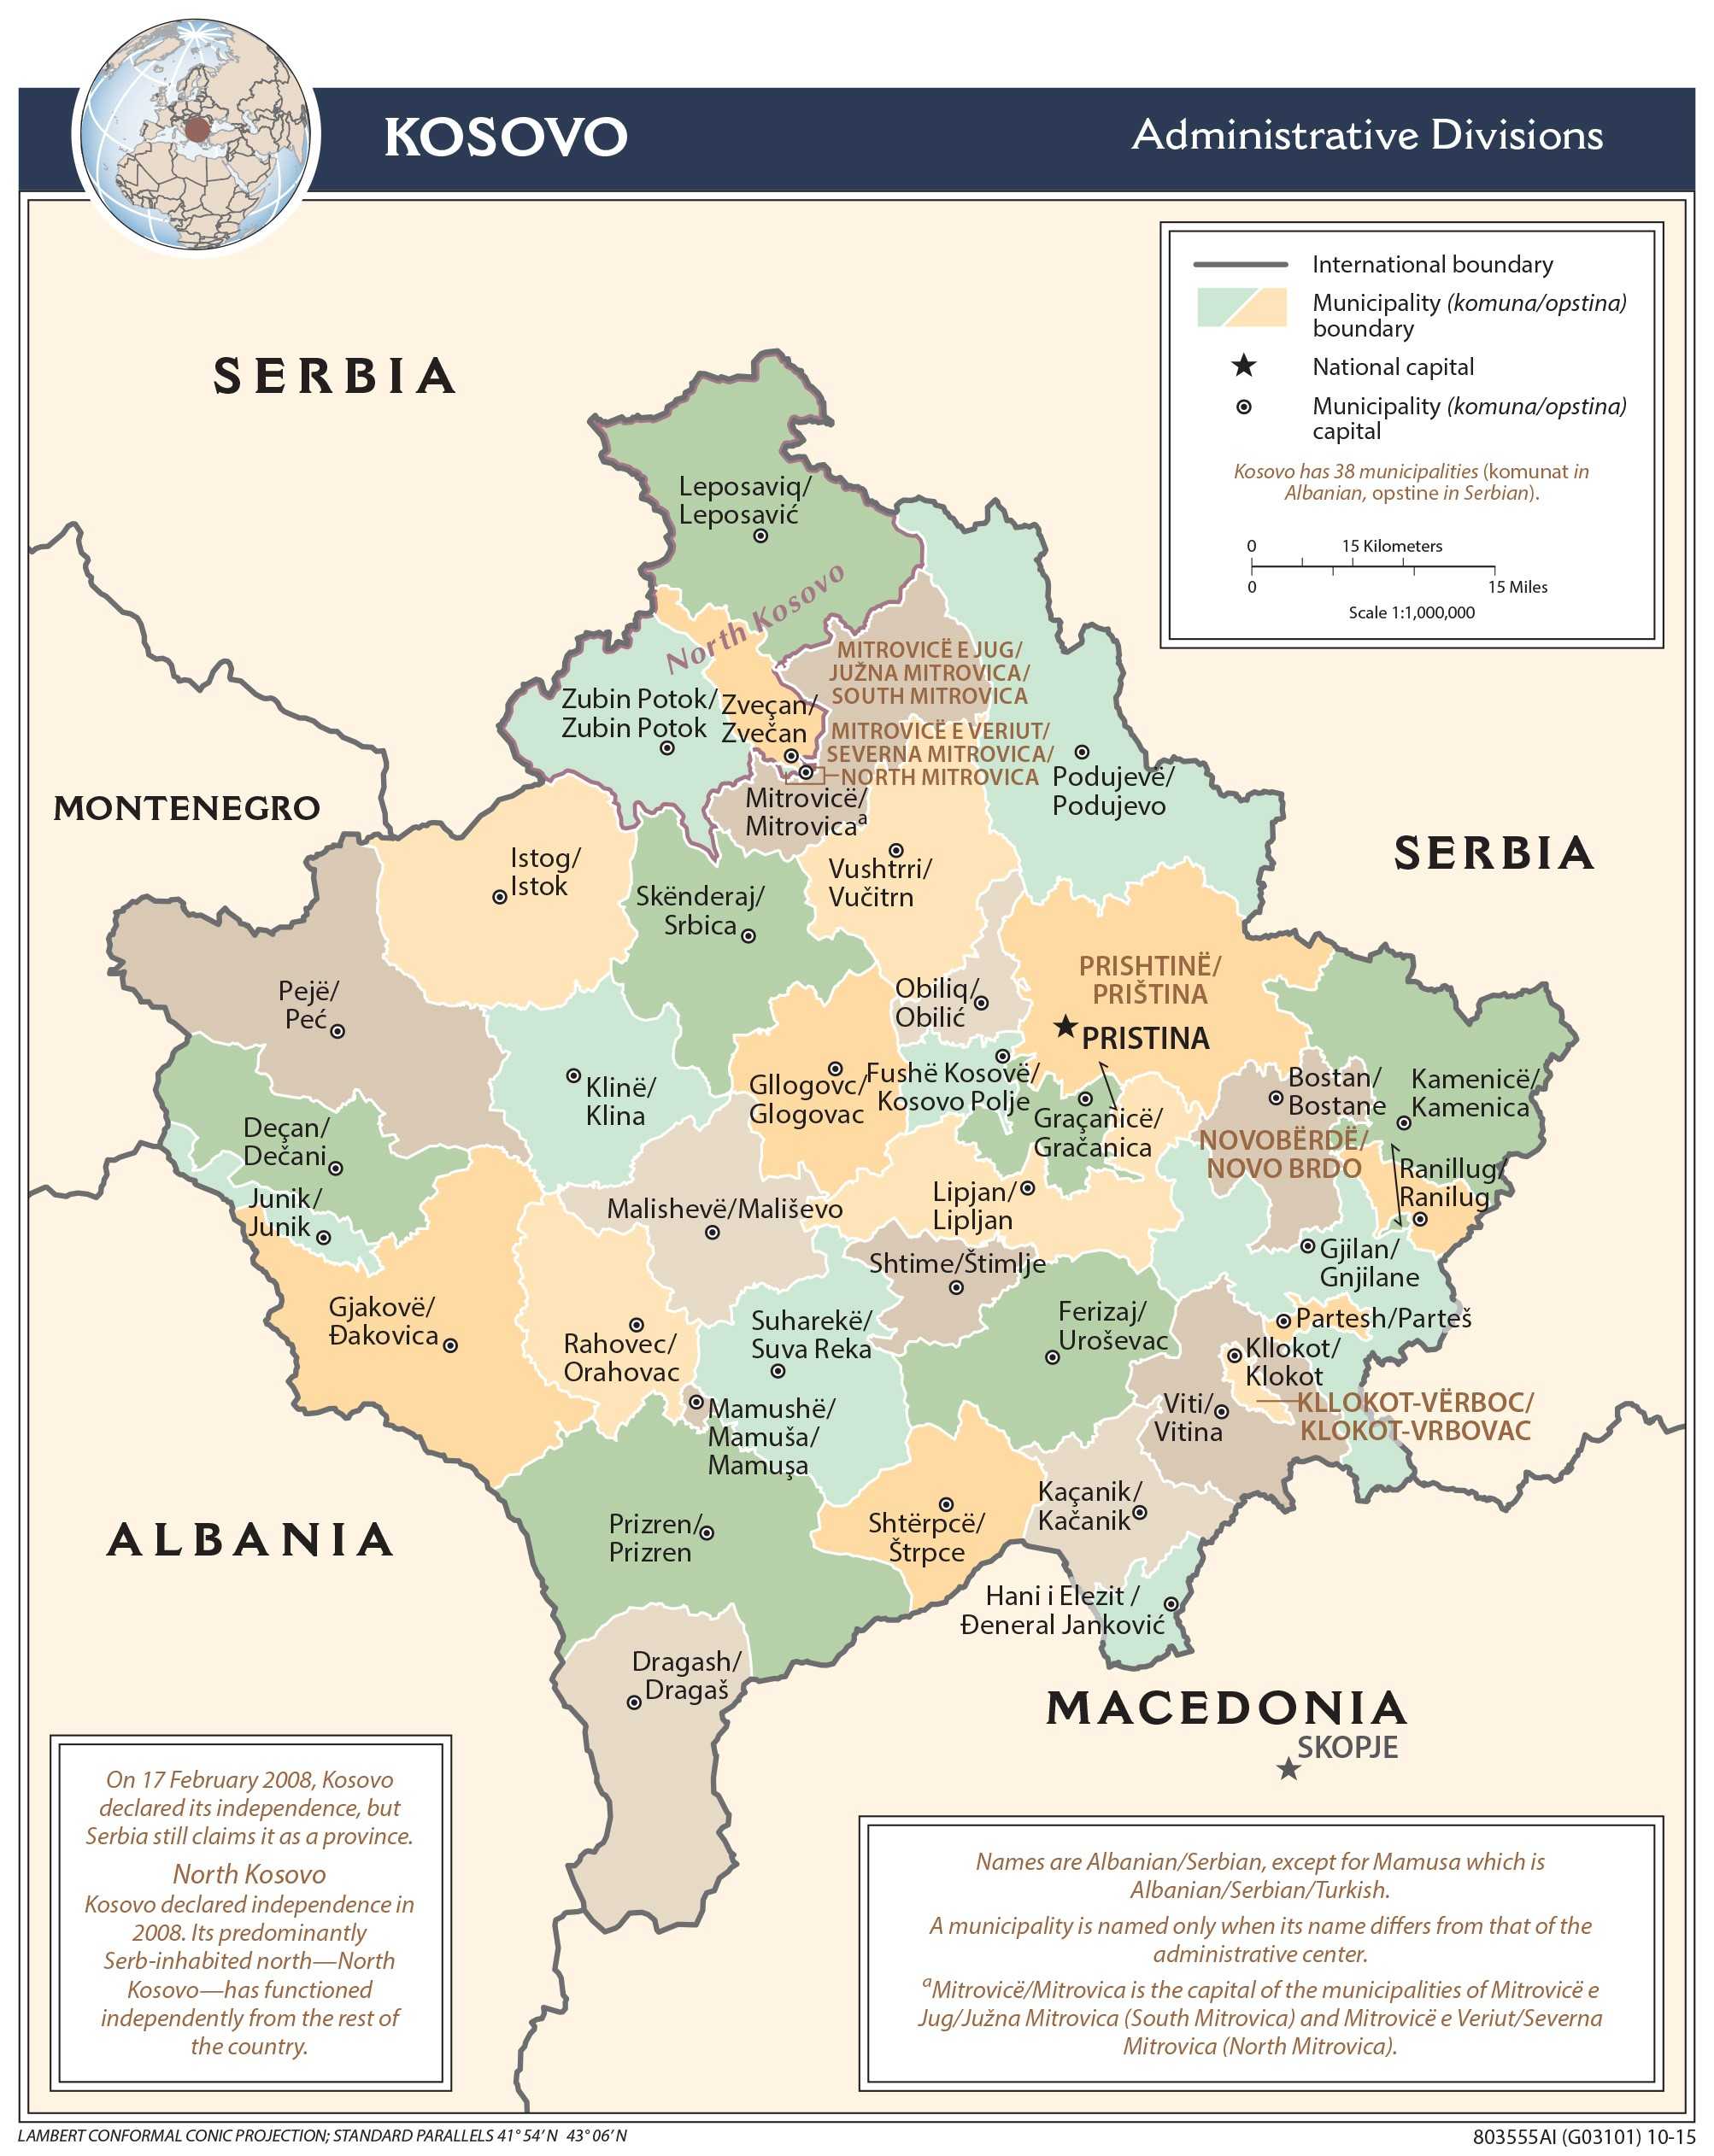 Administrative map of Kosovo.